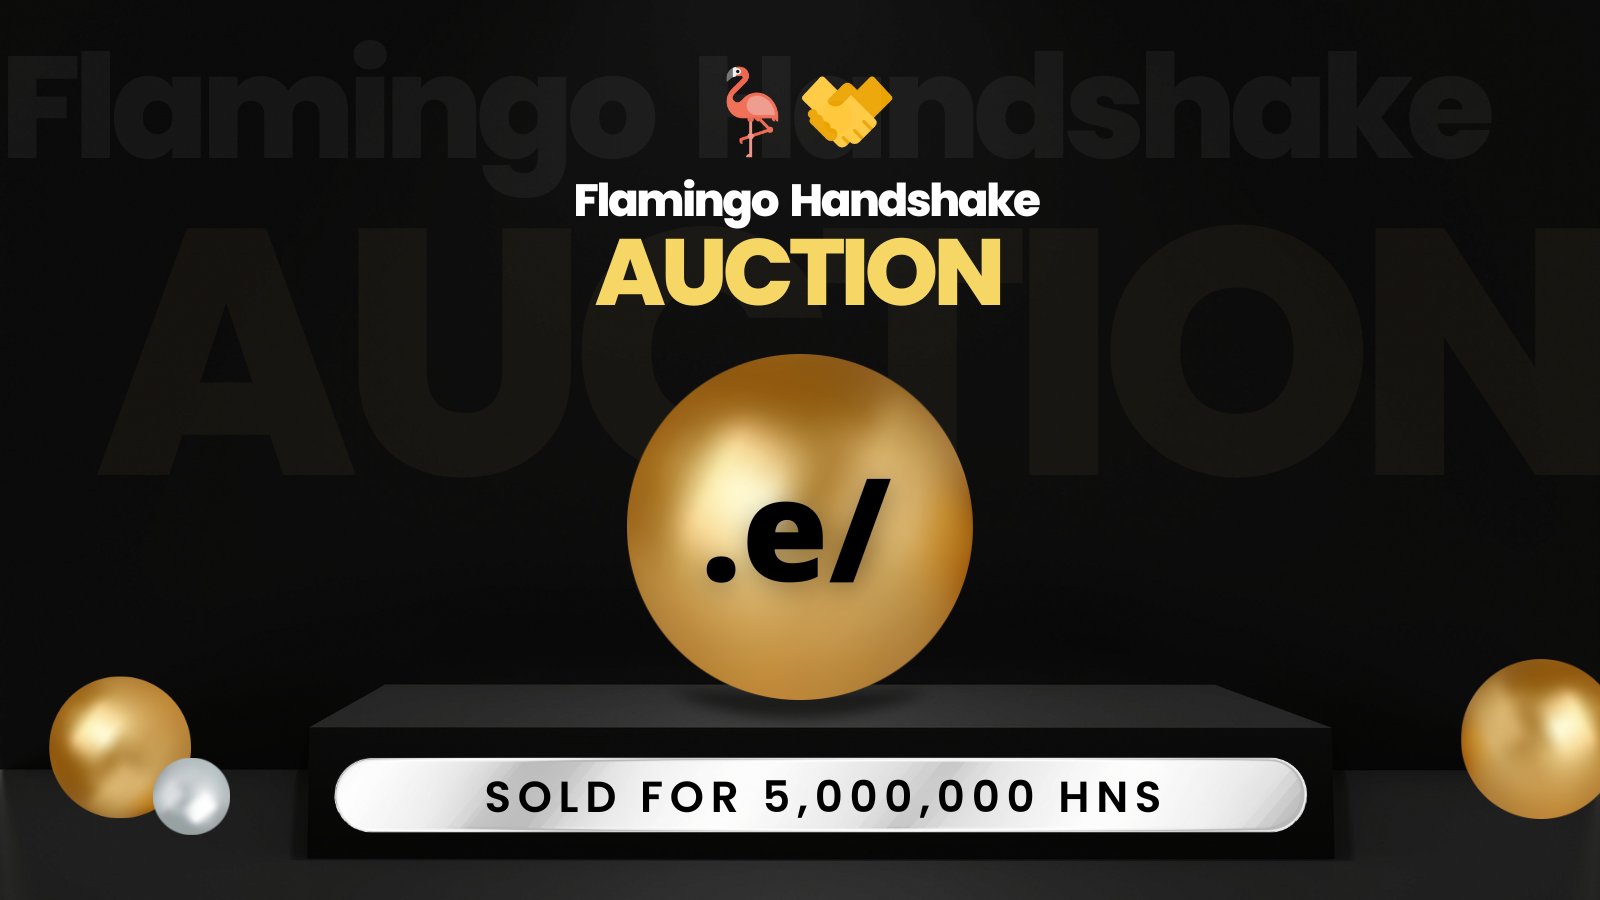 Record: 5 Million HNS Winning auction Bid for .e/ TLD on Handshake